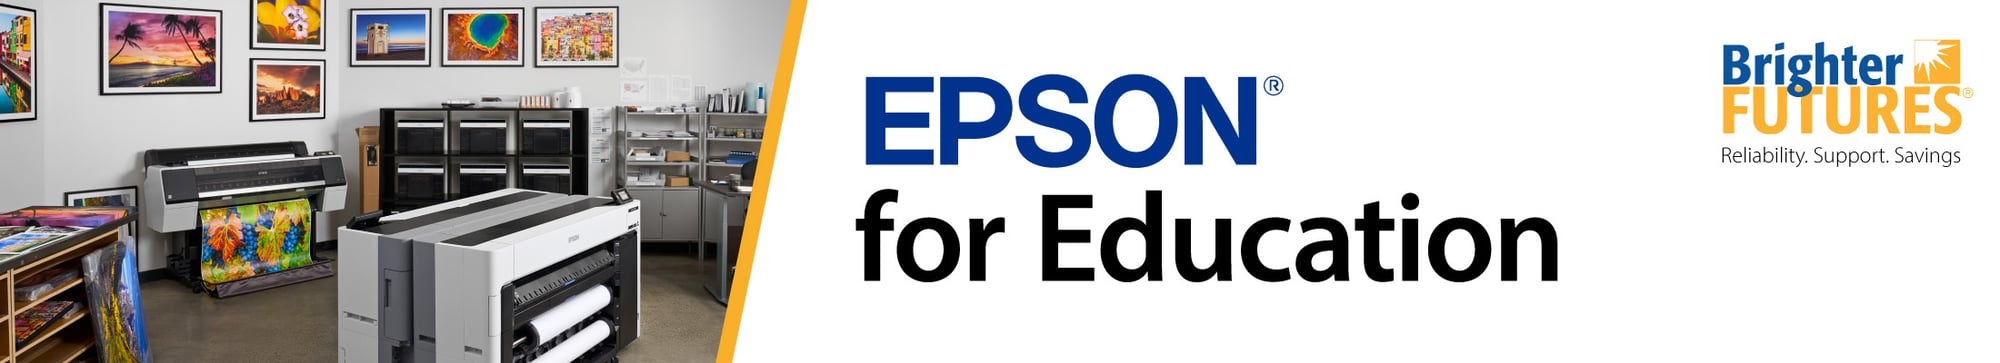 LexJet Epson for Education Bright Futures